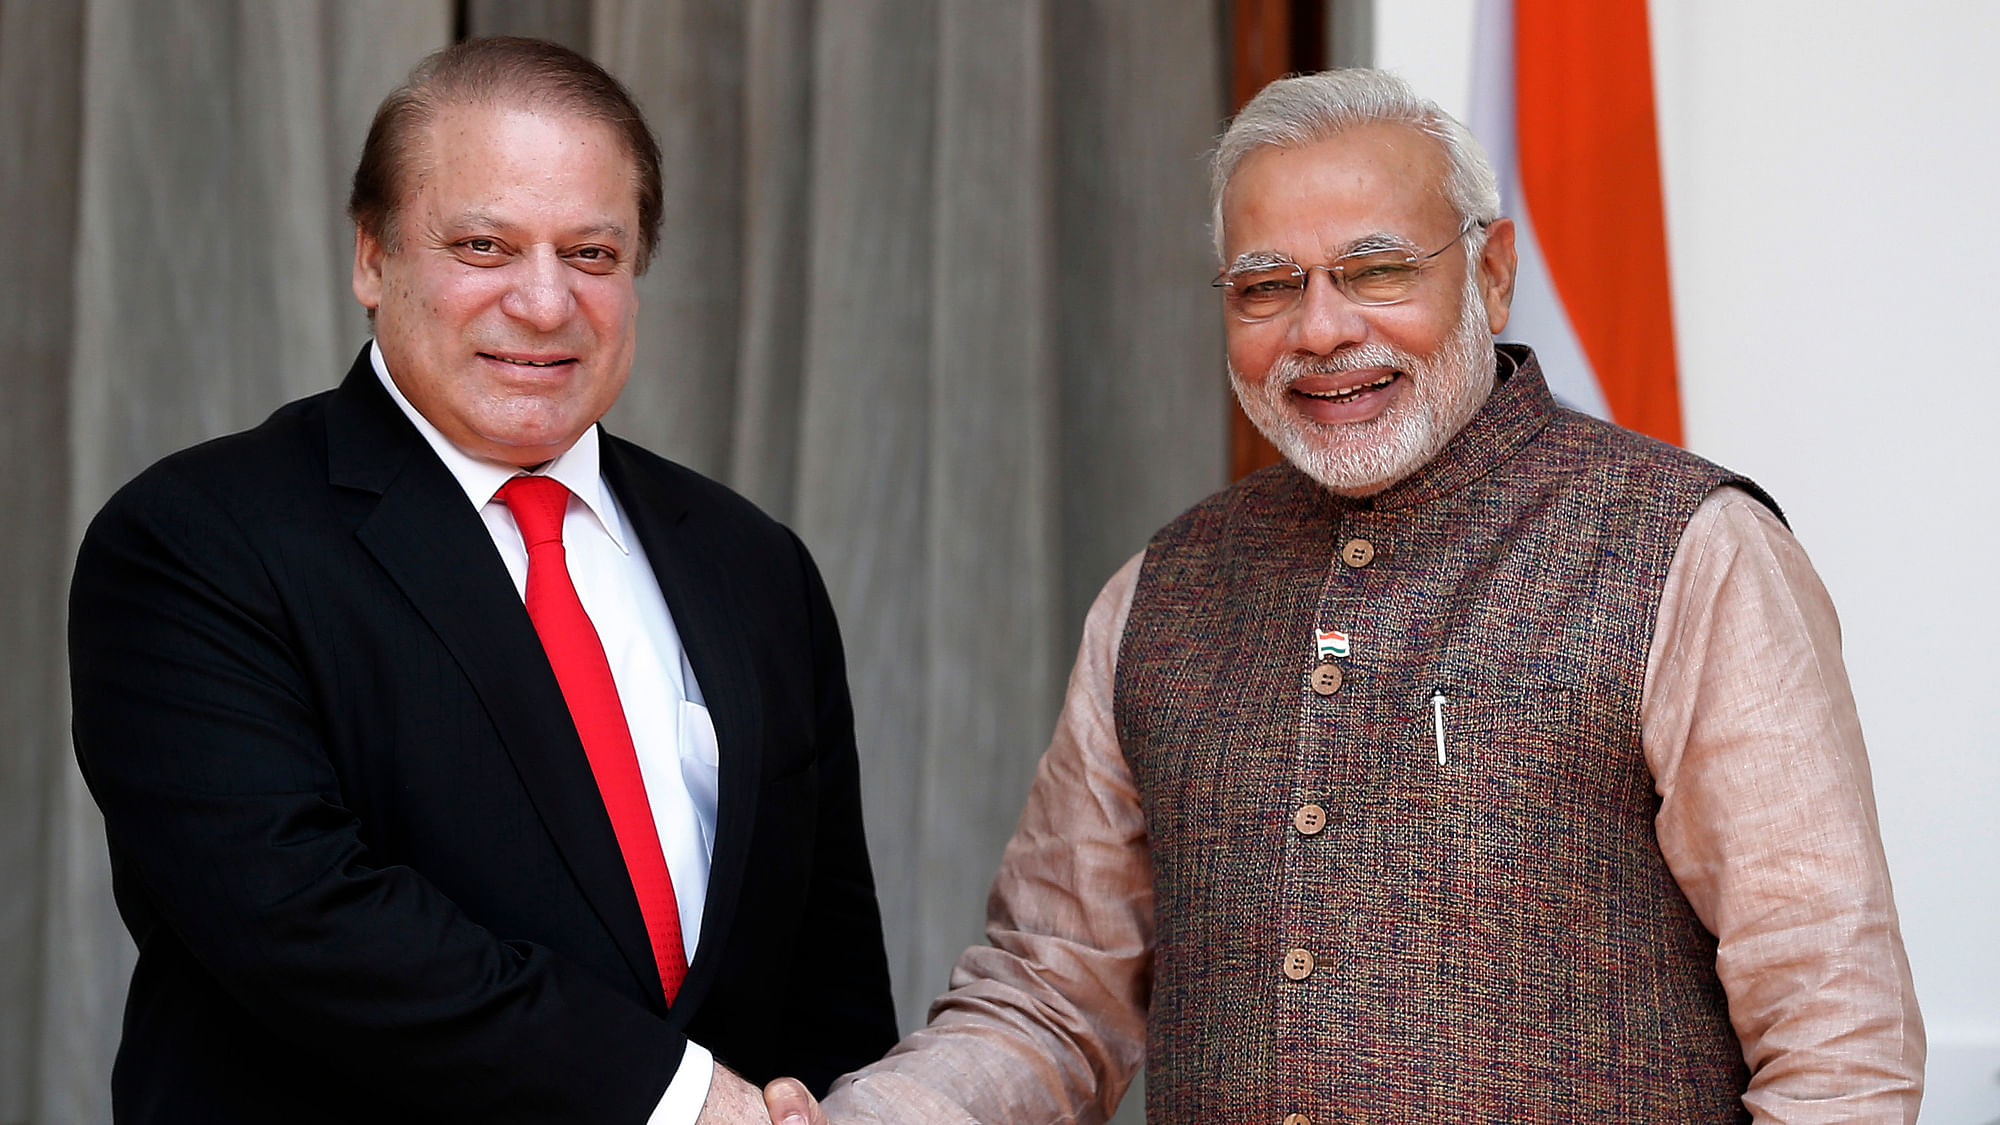 Prime Minister Narendra Modi (R) shakes hands with his Pakistani counterpart Nawaz Sharif (L) in New Delhi in 2014. (Photo: Reuters)